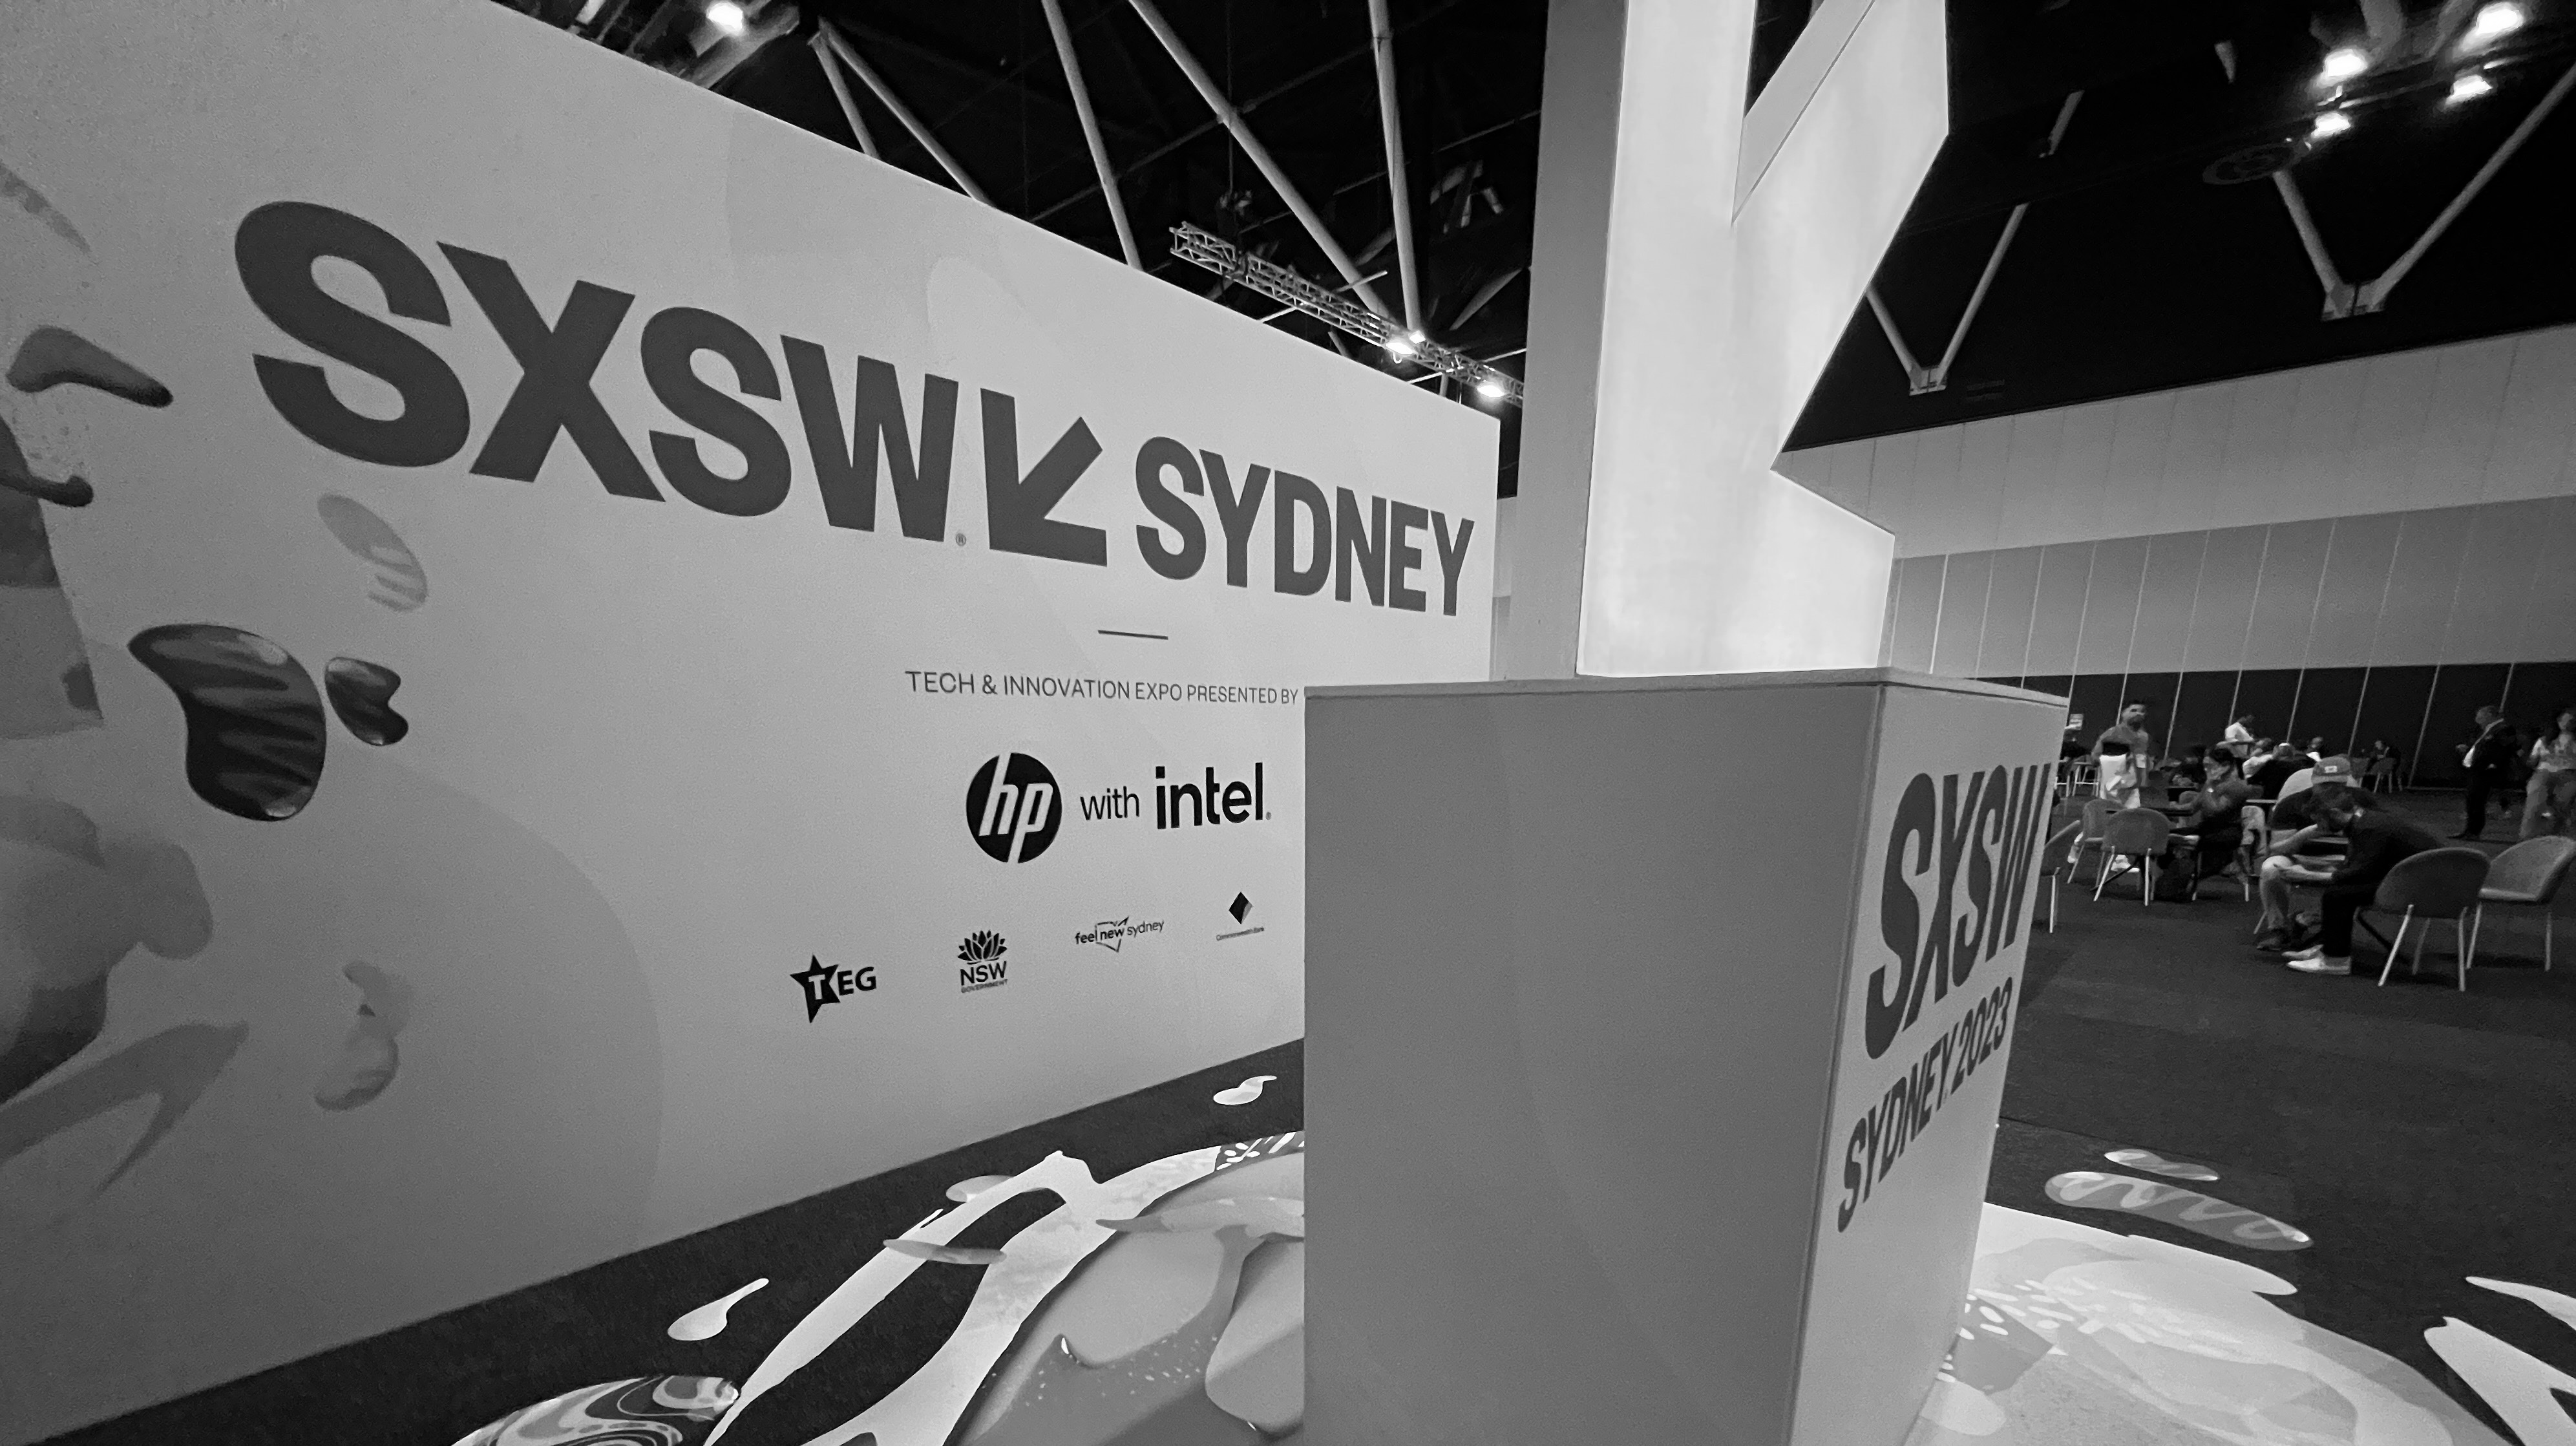 SXSW Sydney - How’d it stack up?